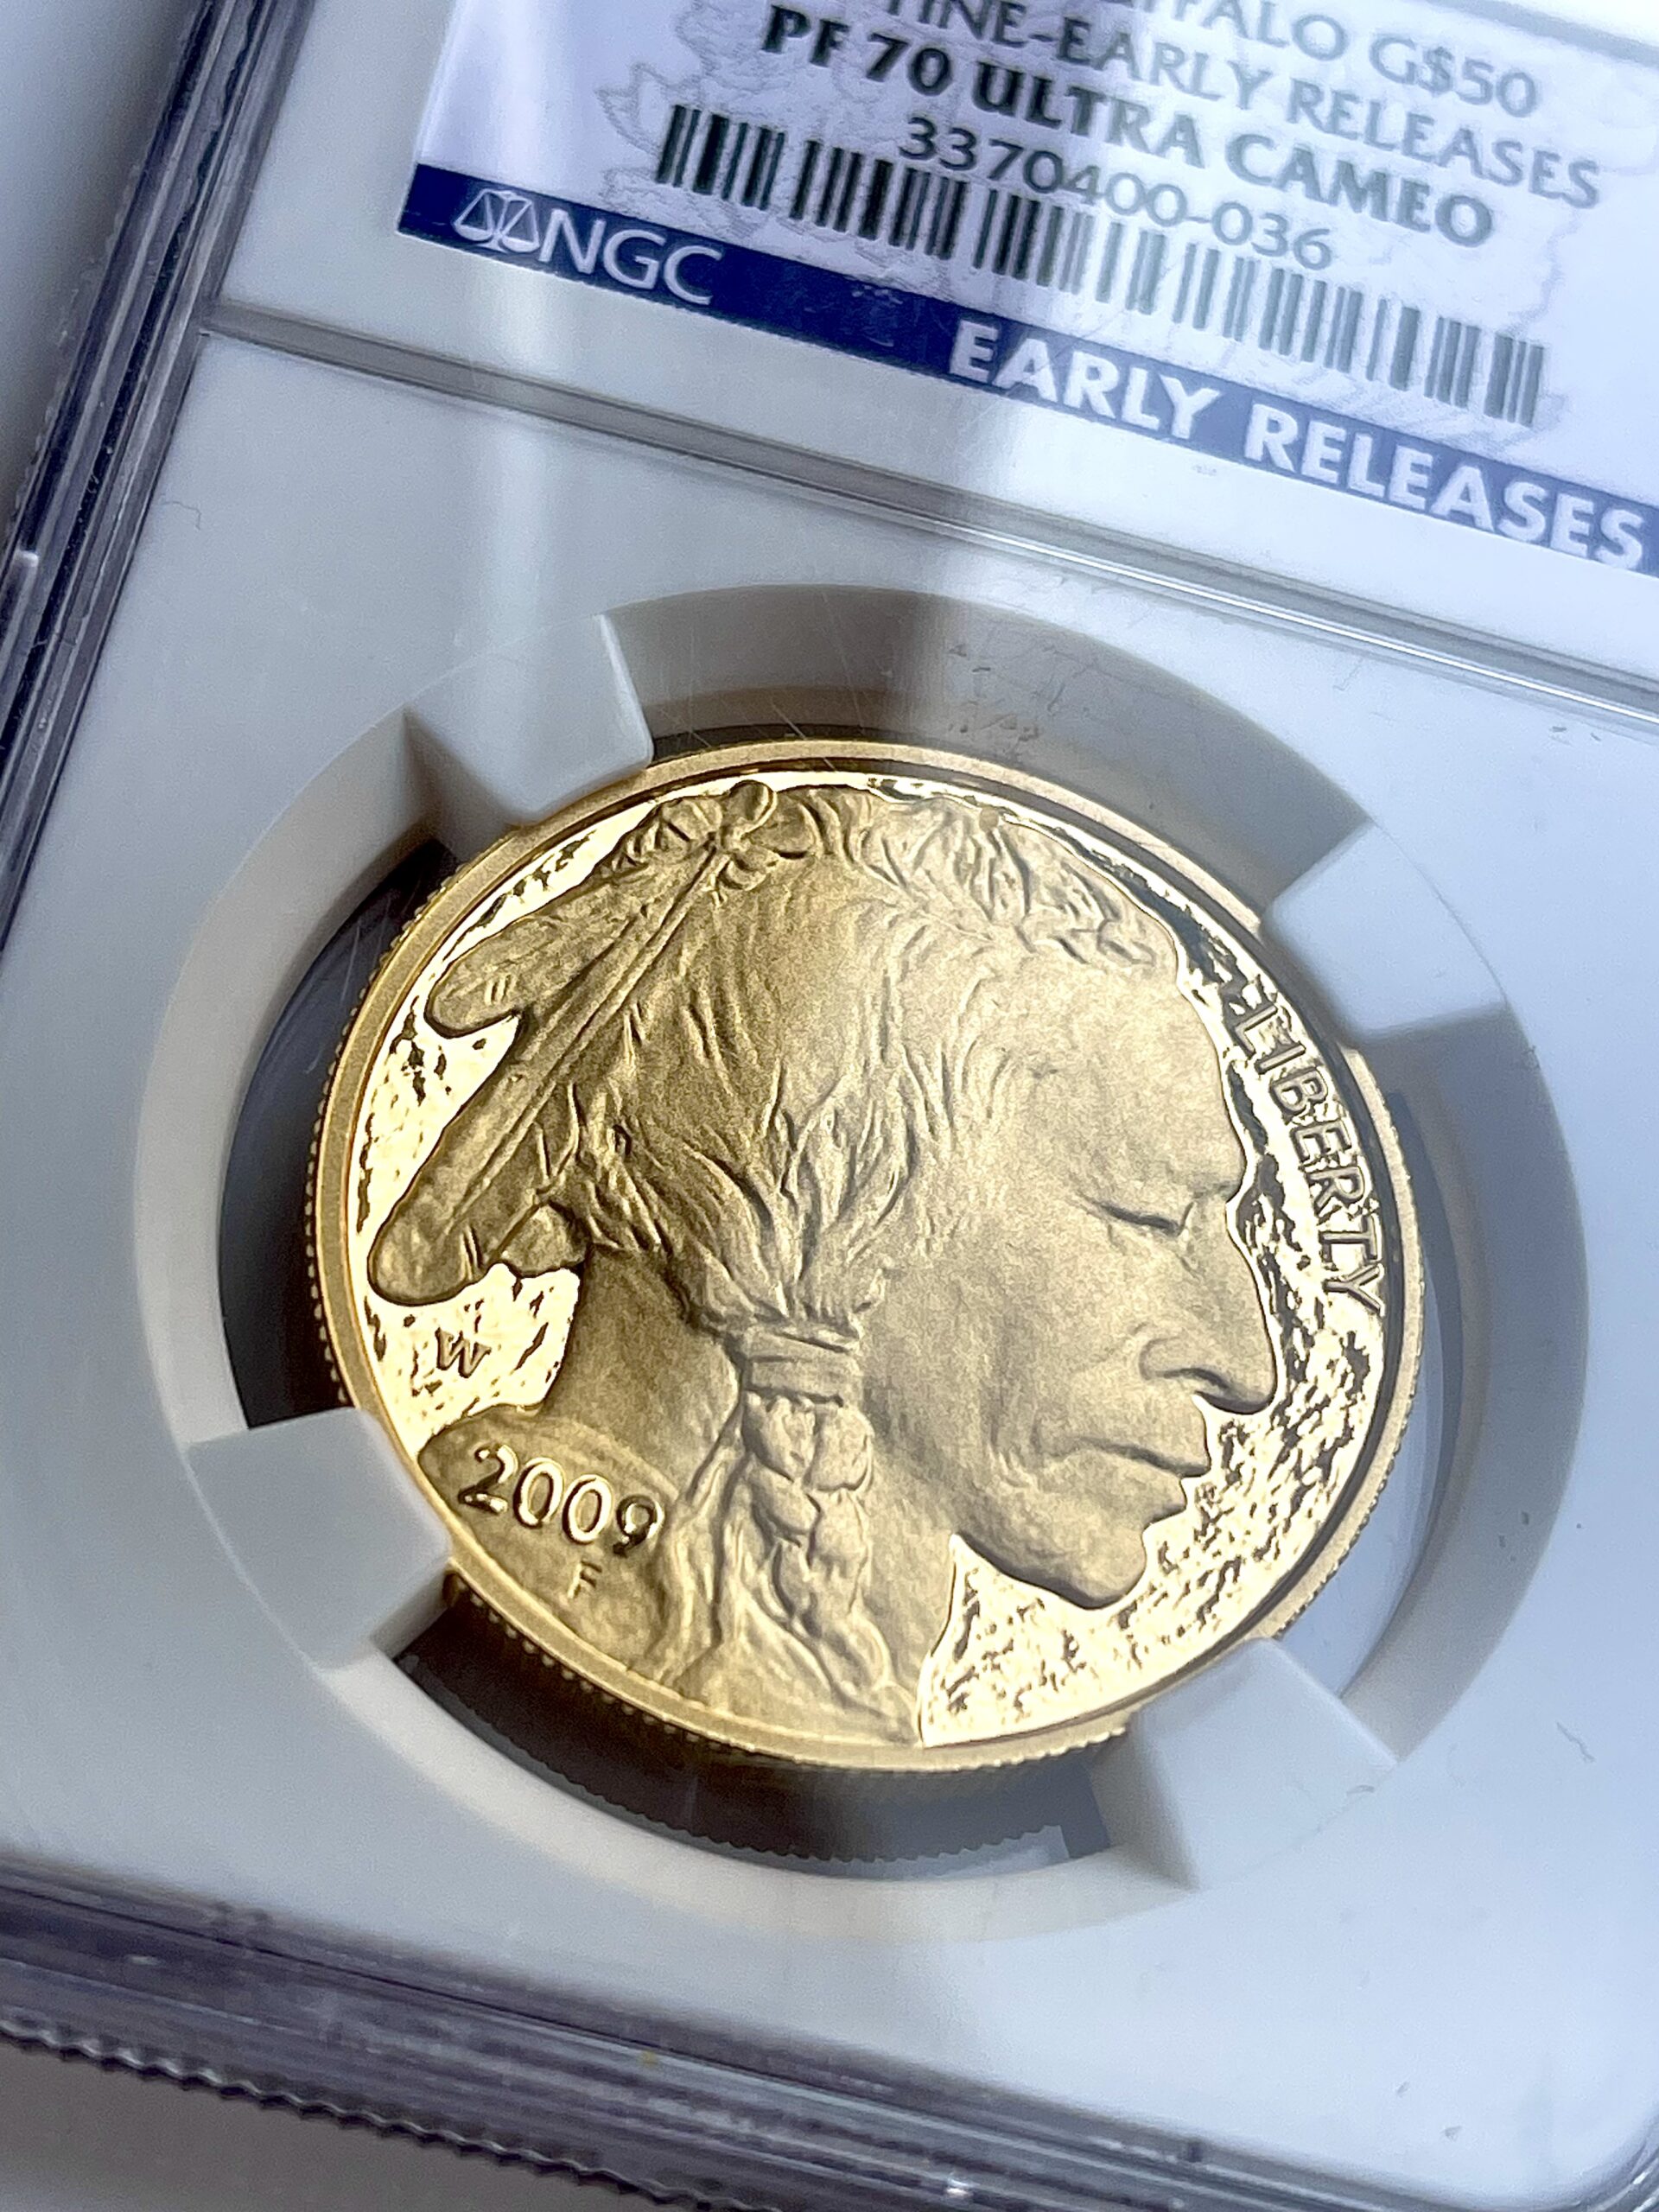 États-Unis American Buffalo Gold 2009, versions anticipées NGC PF70 UCAM